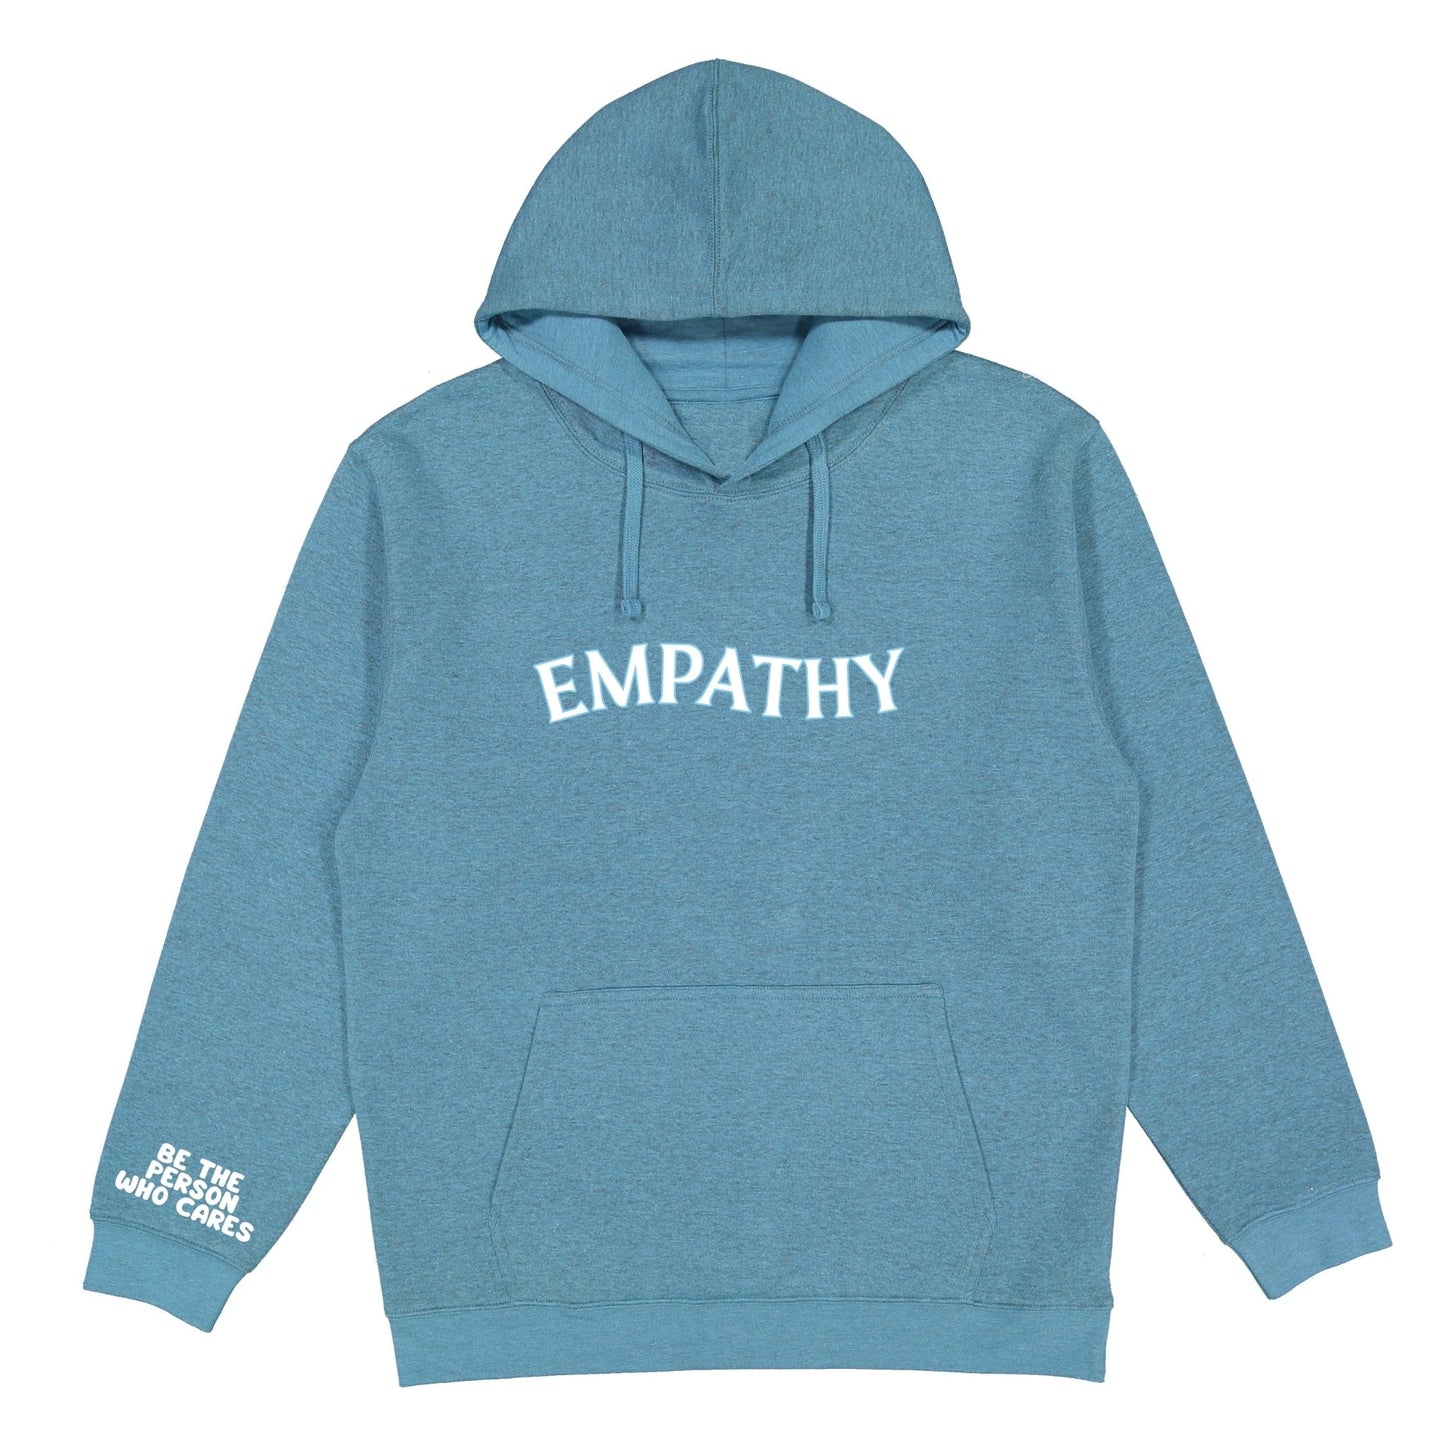 Empathy Hoodie Wear The Peace Hoodies Heather Blue S